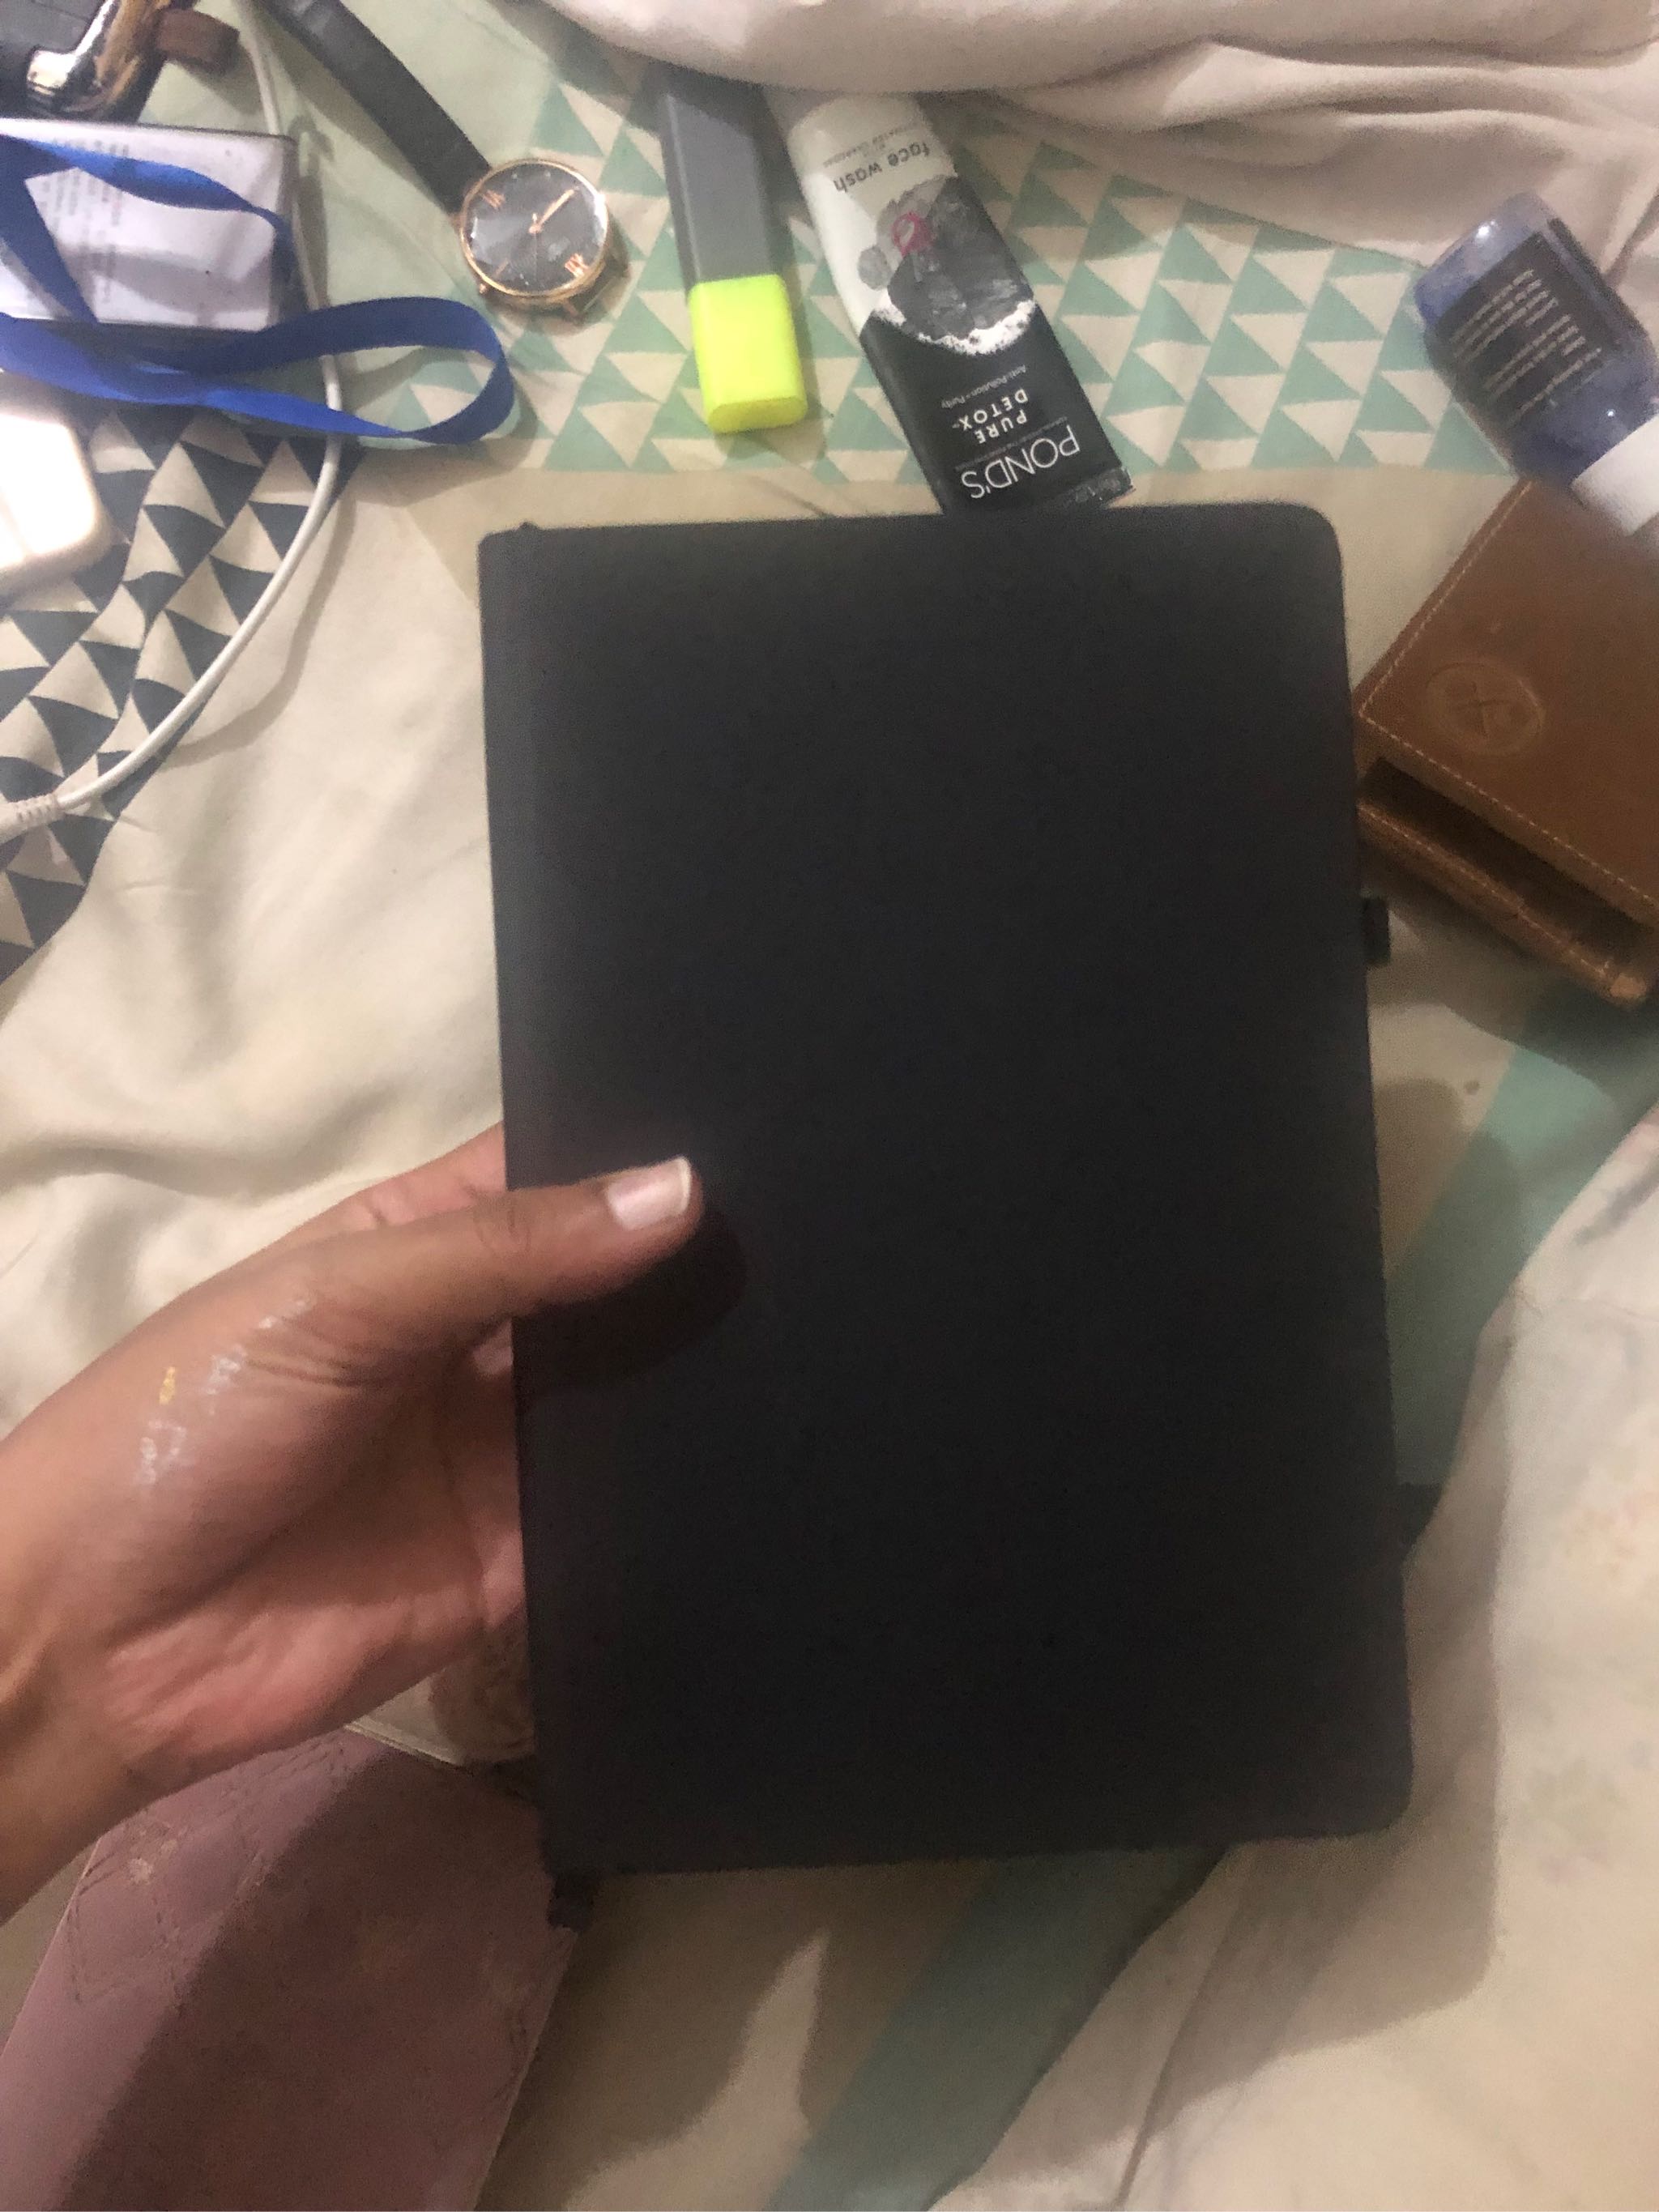 Black Paper Notebook / Black Paper Journal with Black Cardboard